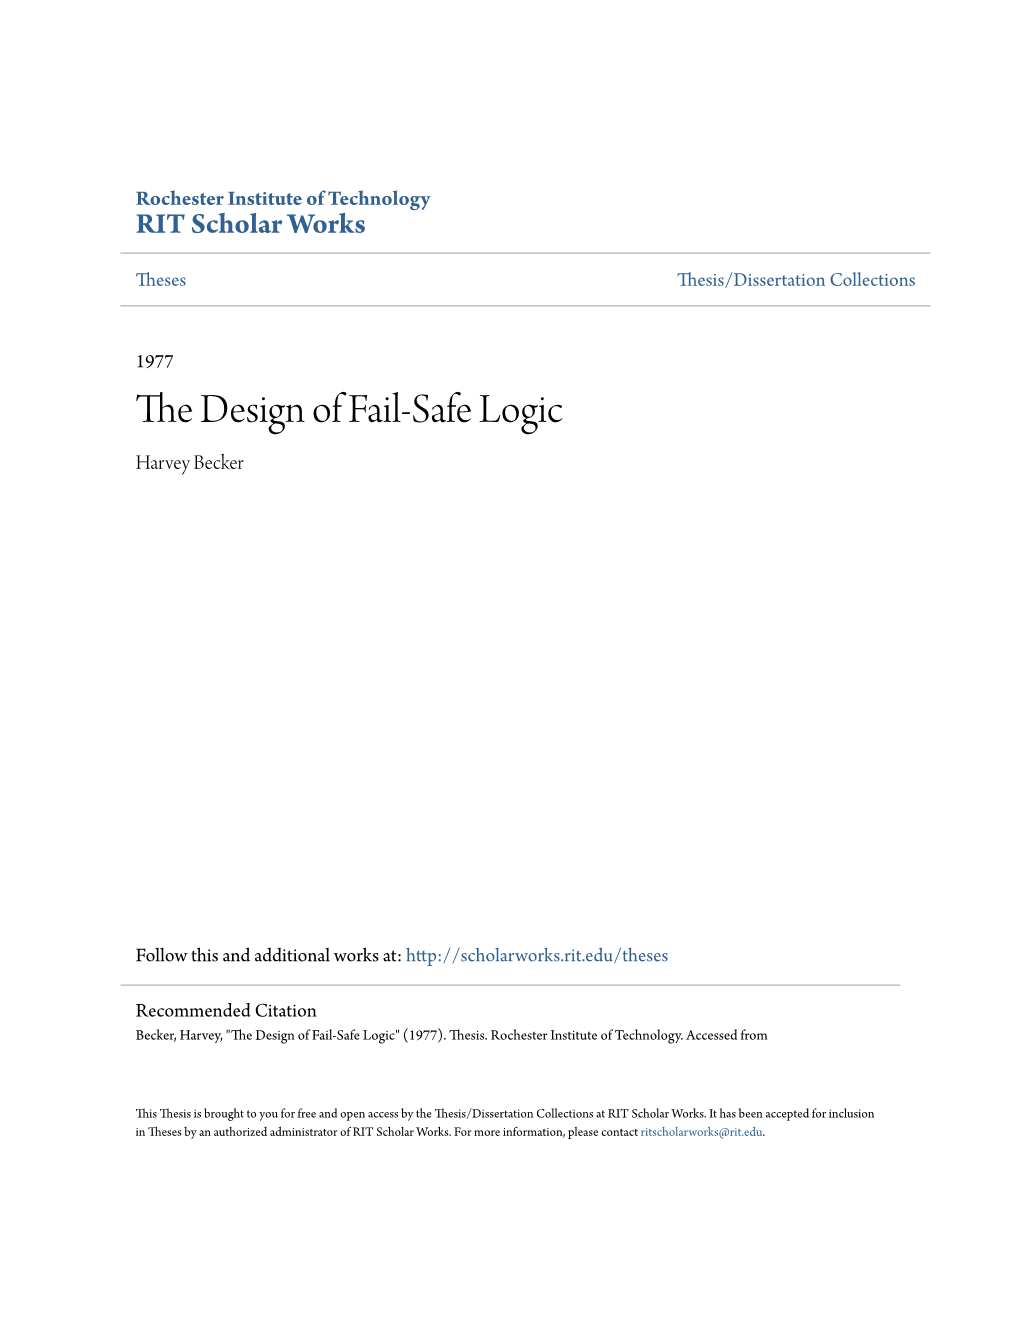 The Design of Fail-Safe Logic